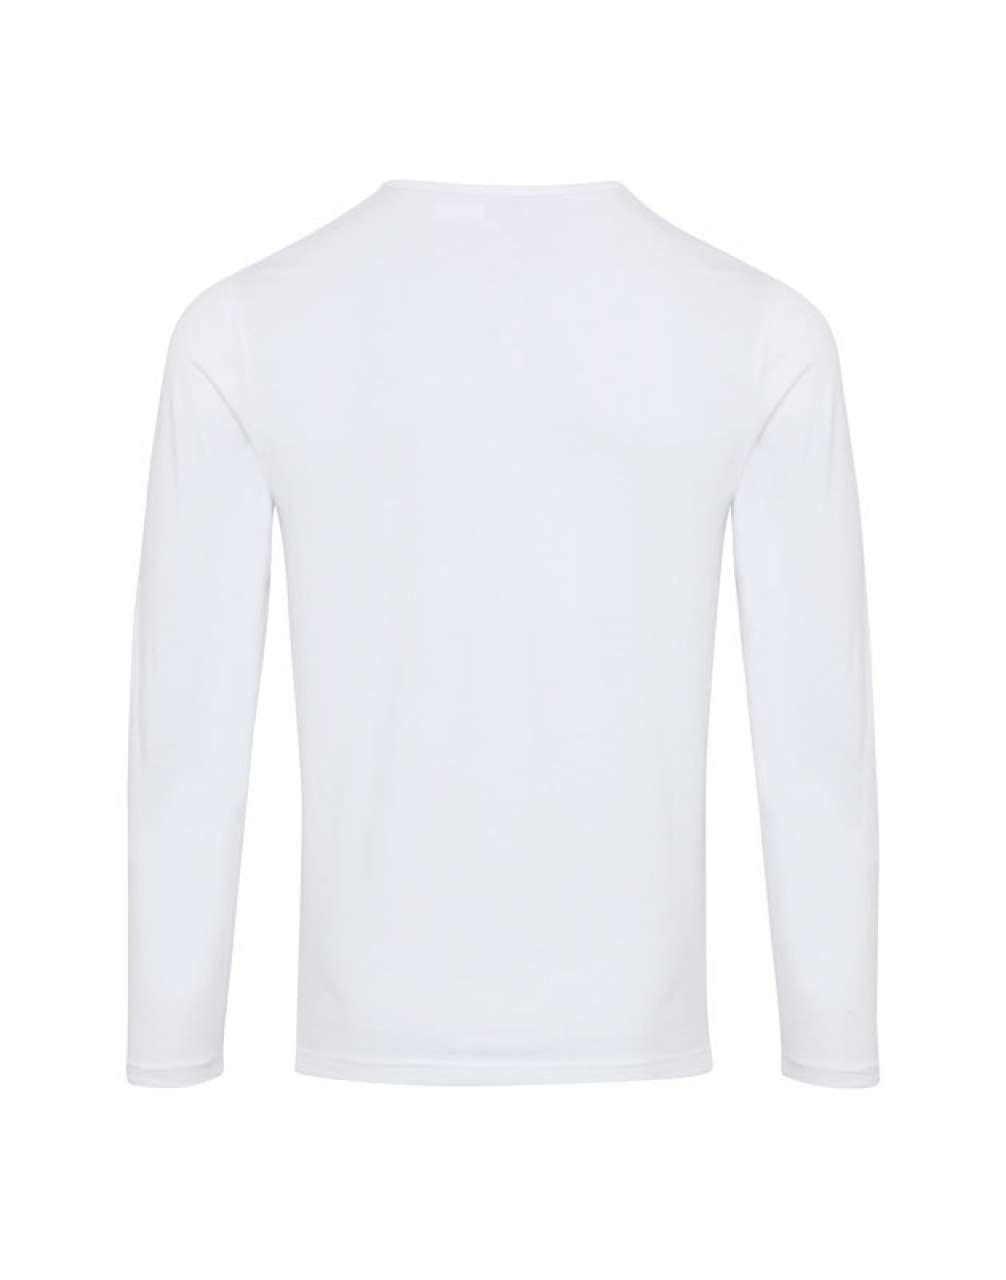 Premier Herren Longshirt T-Shirt Oversize Longsleeve Sweatshirt